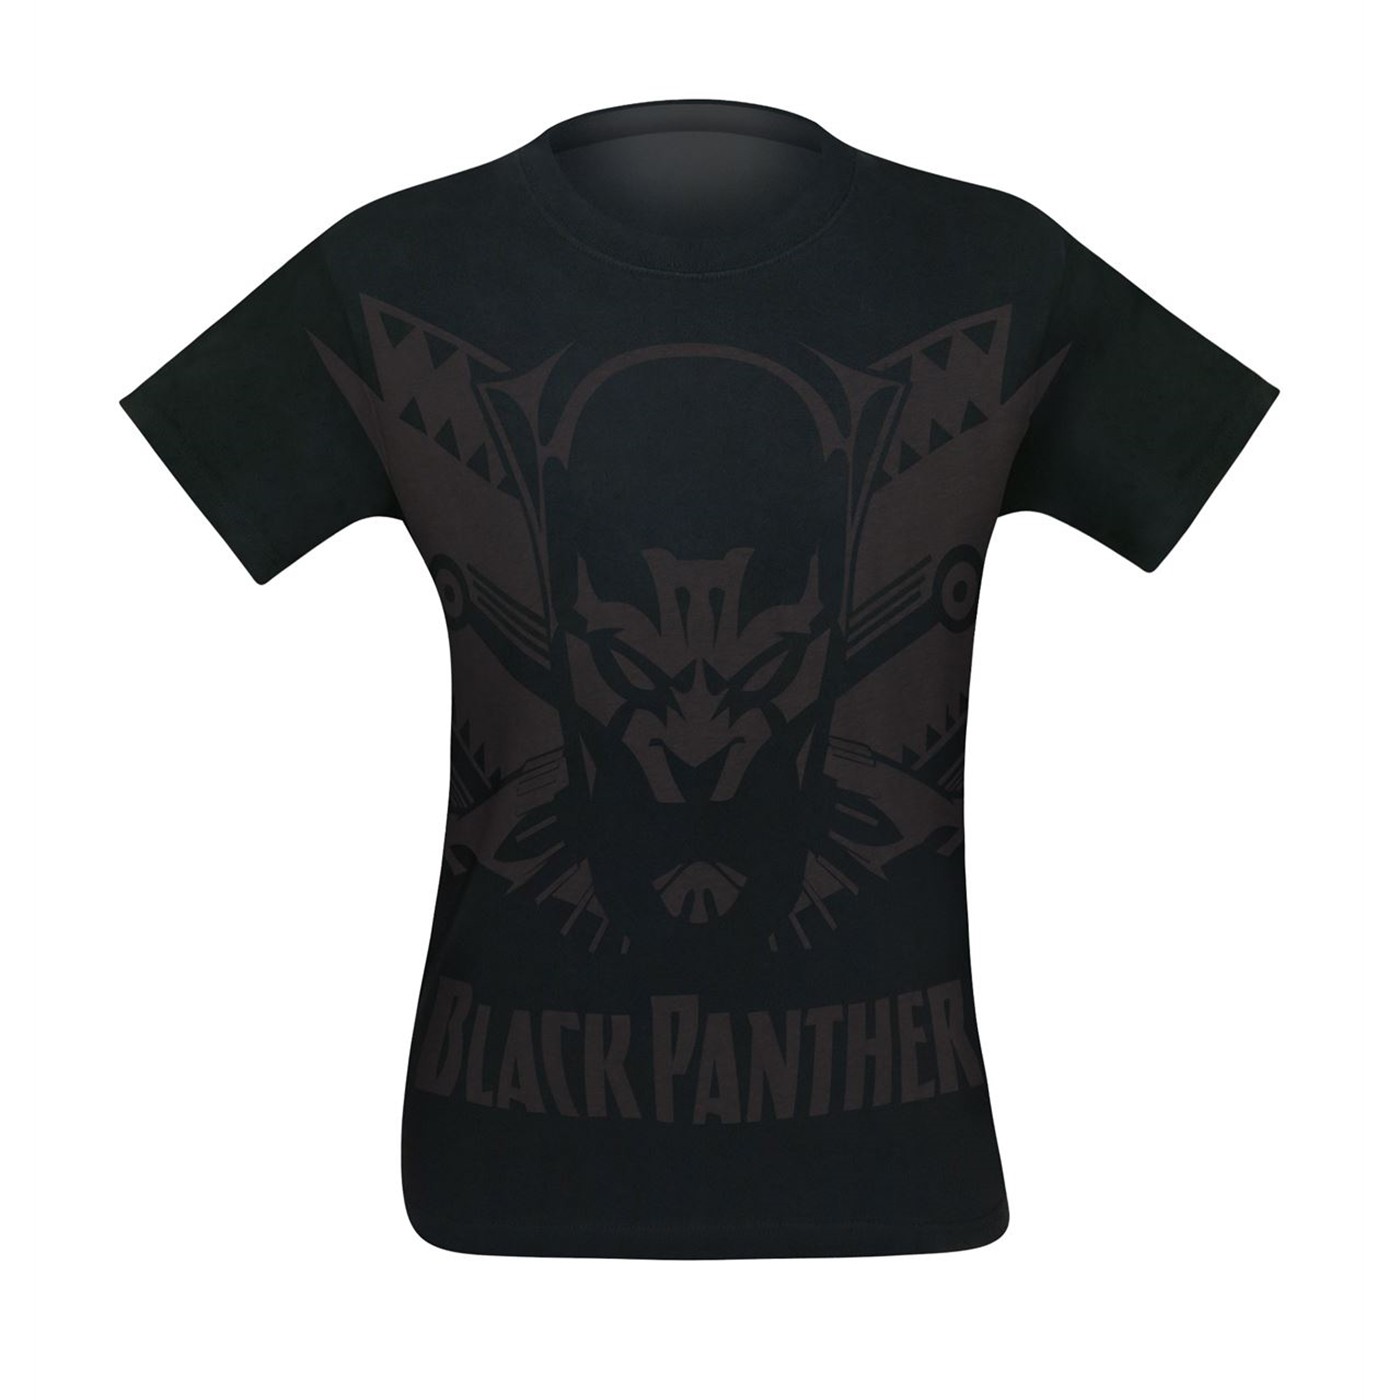 Black Panther Shadow Cat Men's T-Shirt